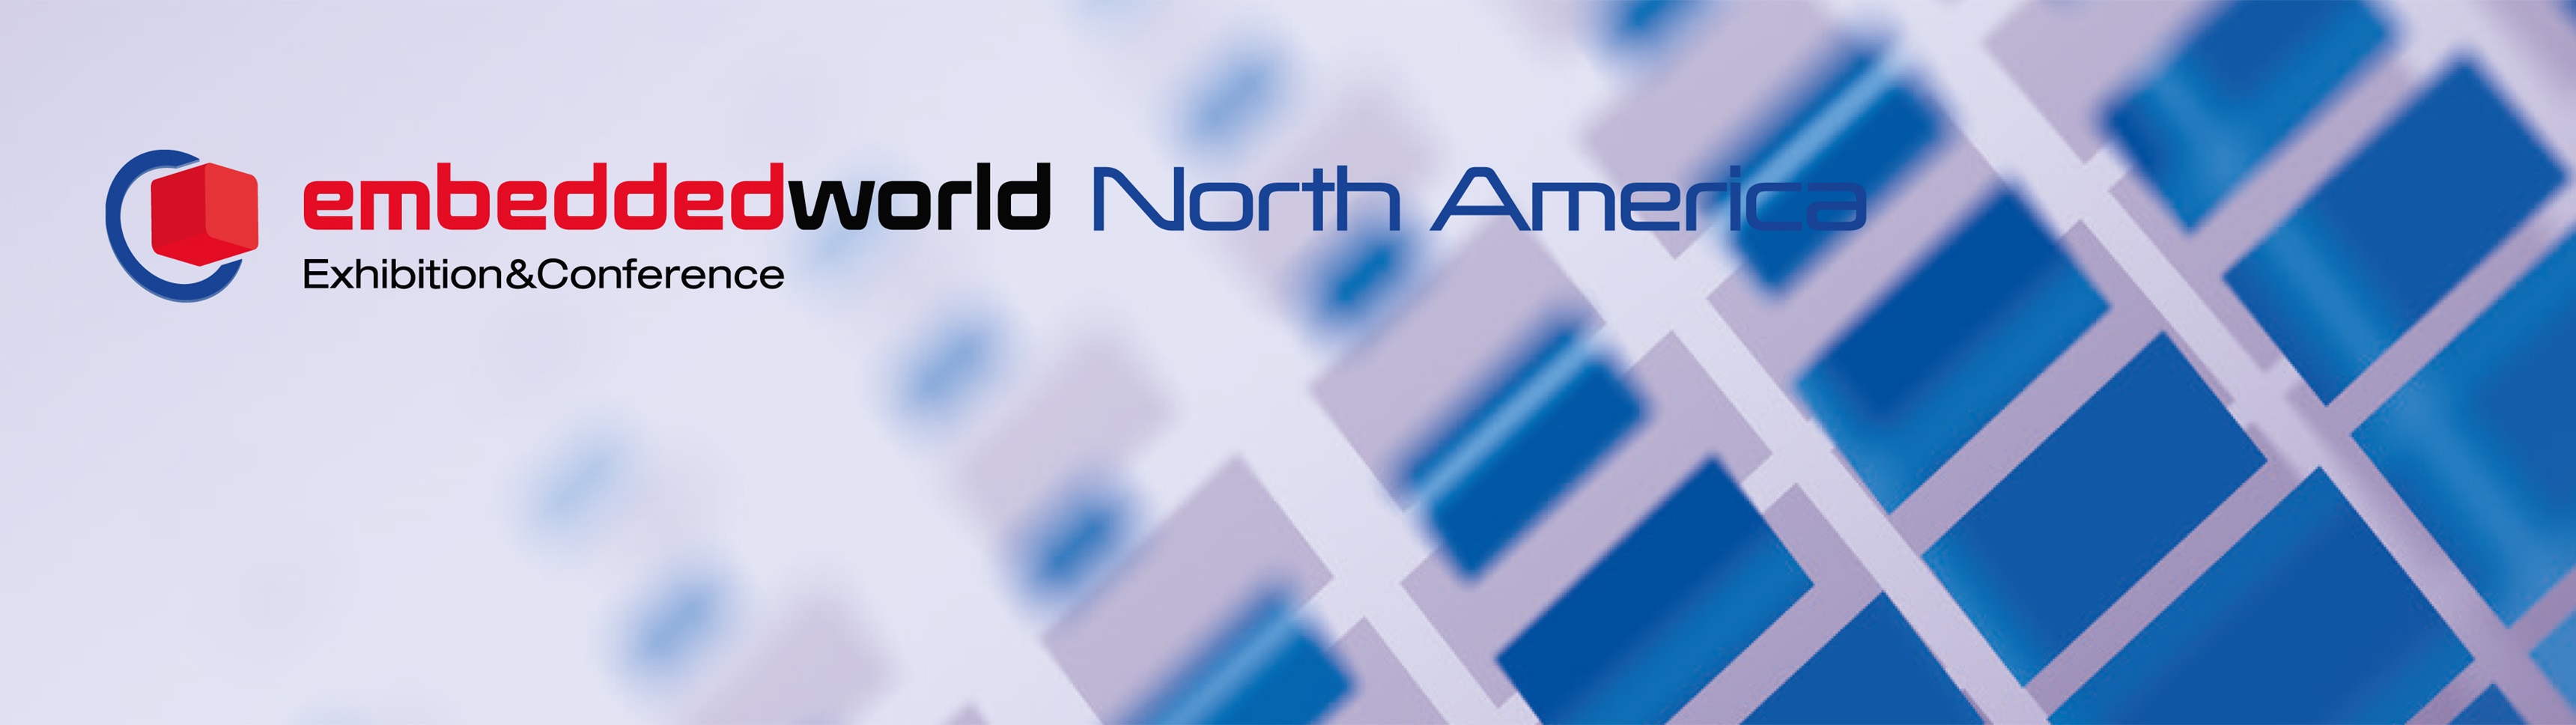 embeddedworld North America